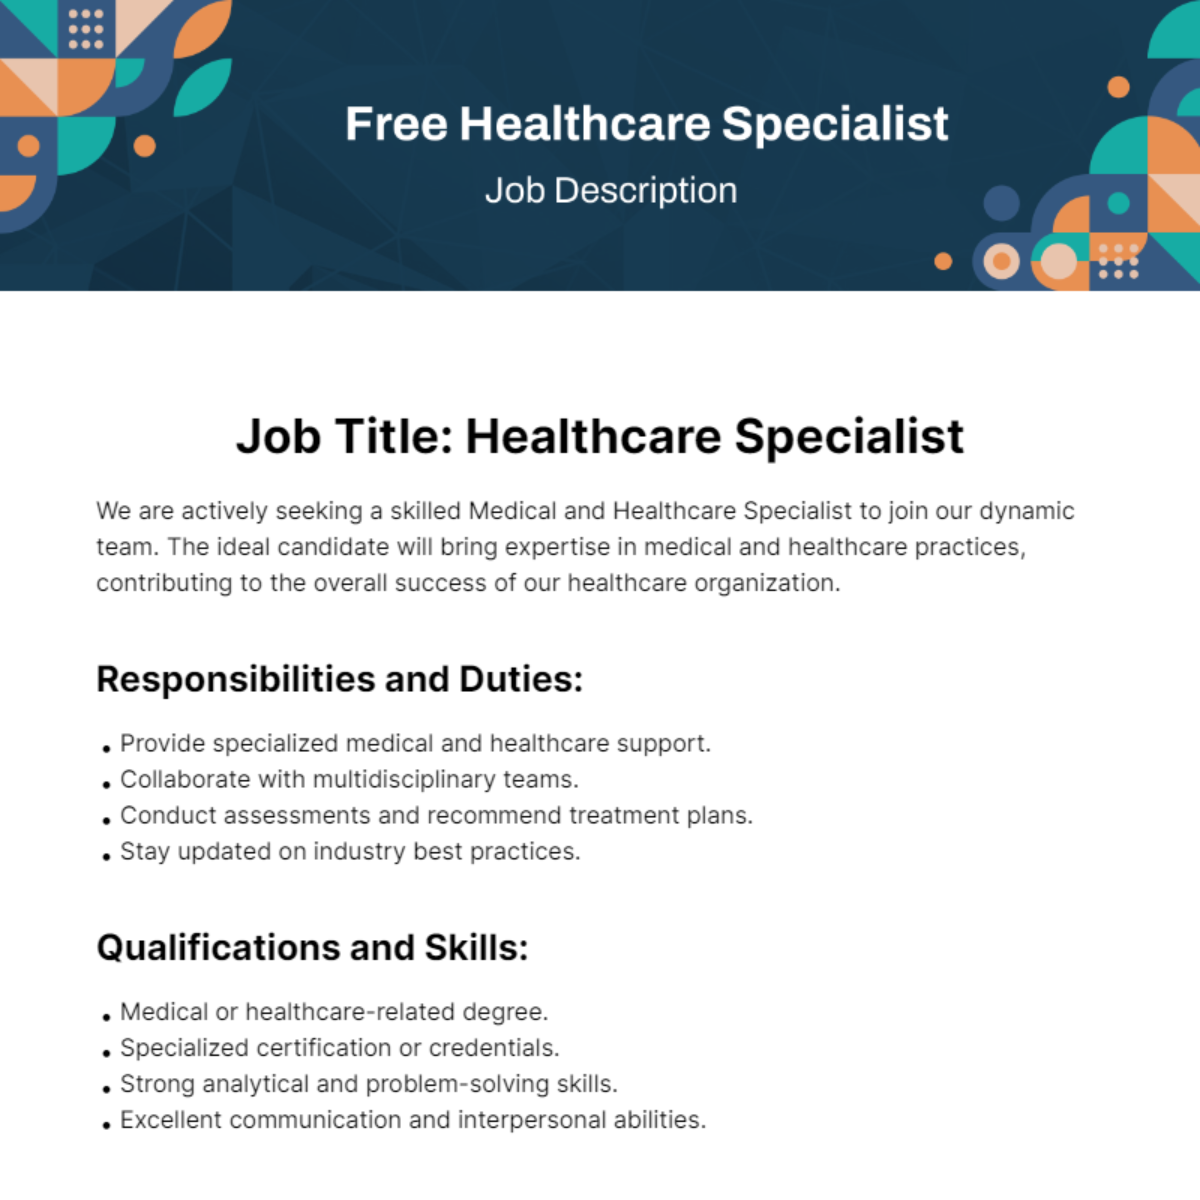 Free Healthcare Specialist Job Description Template